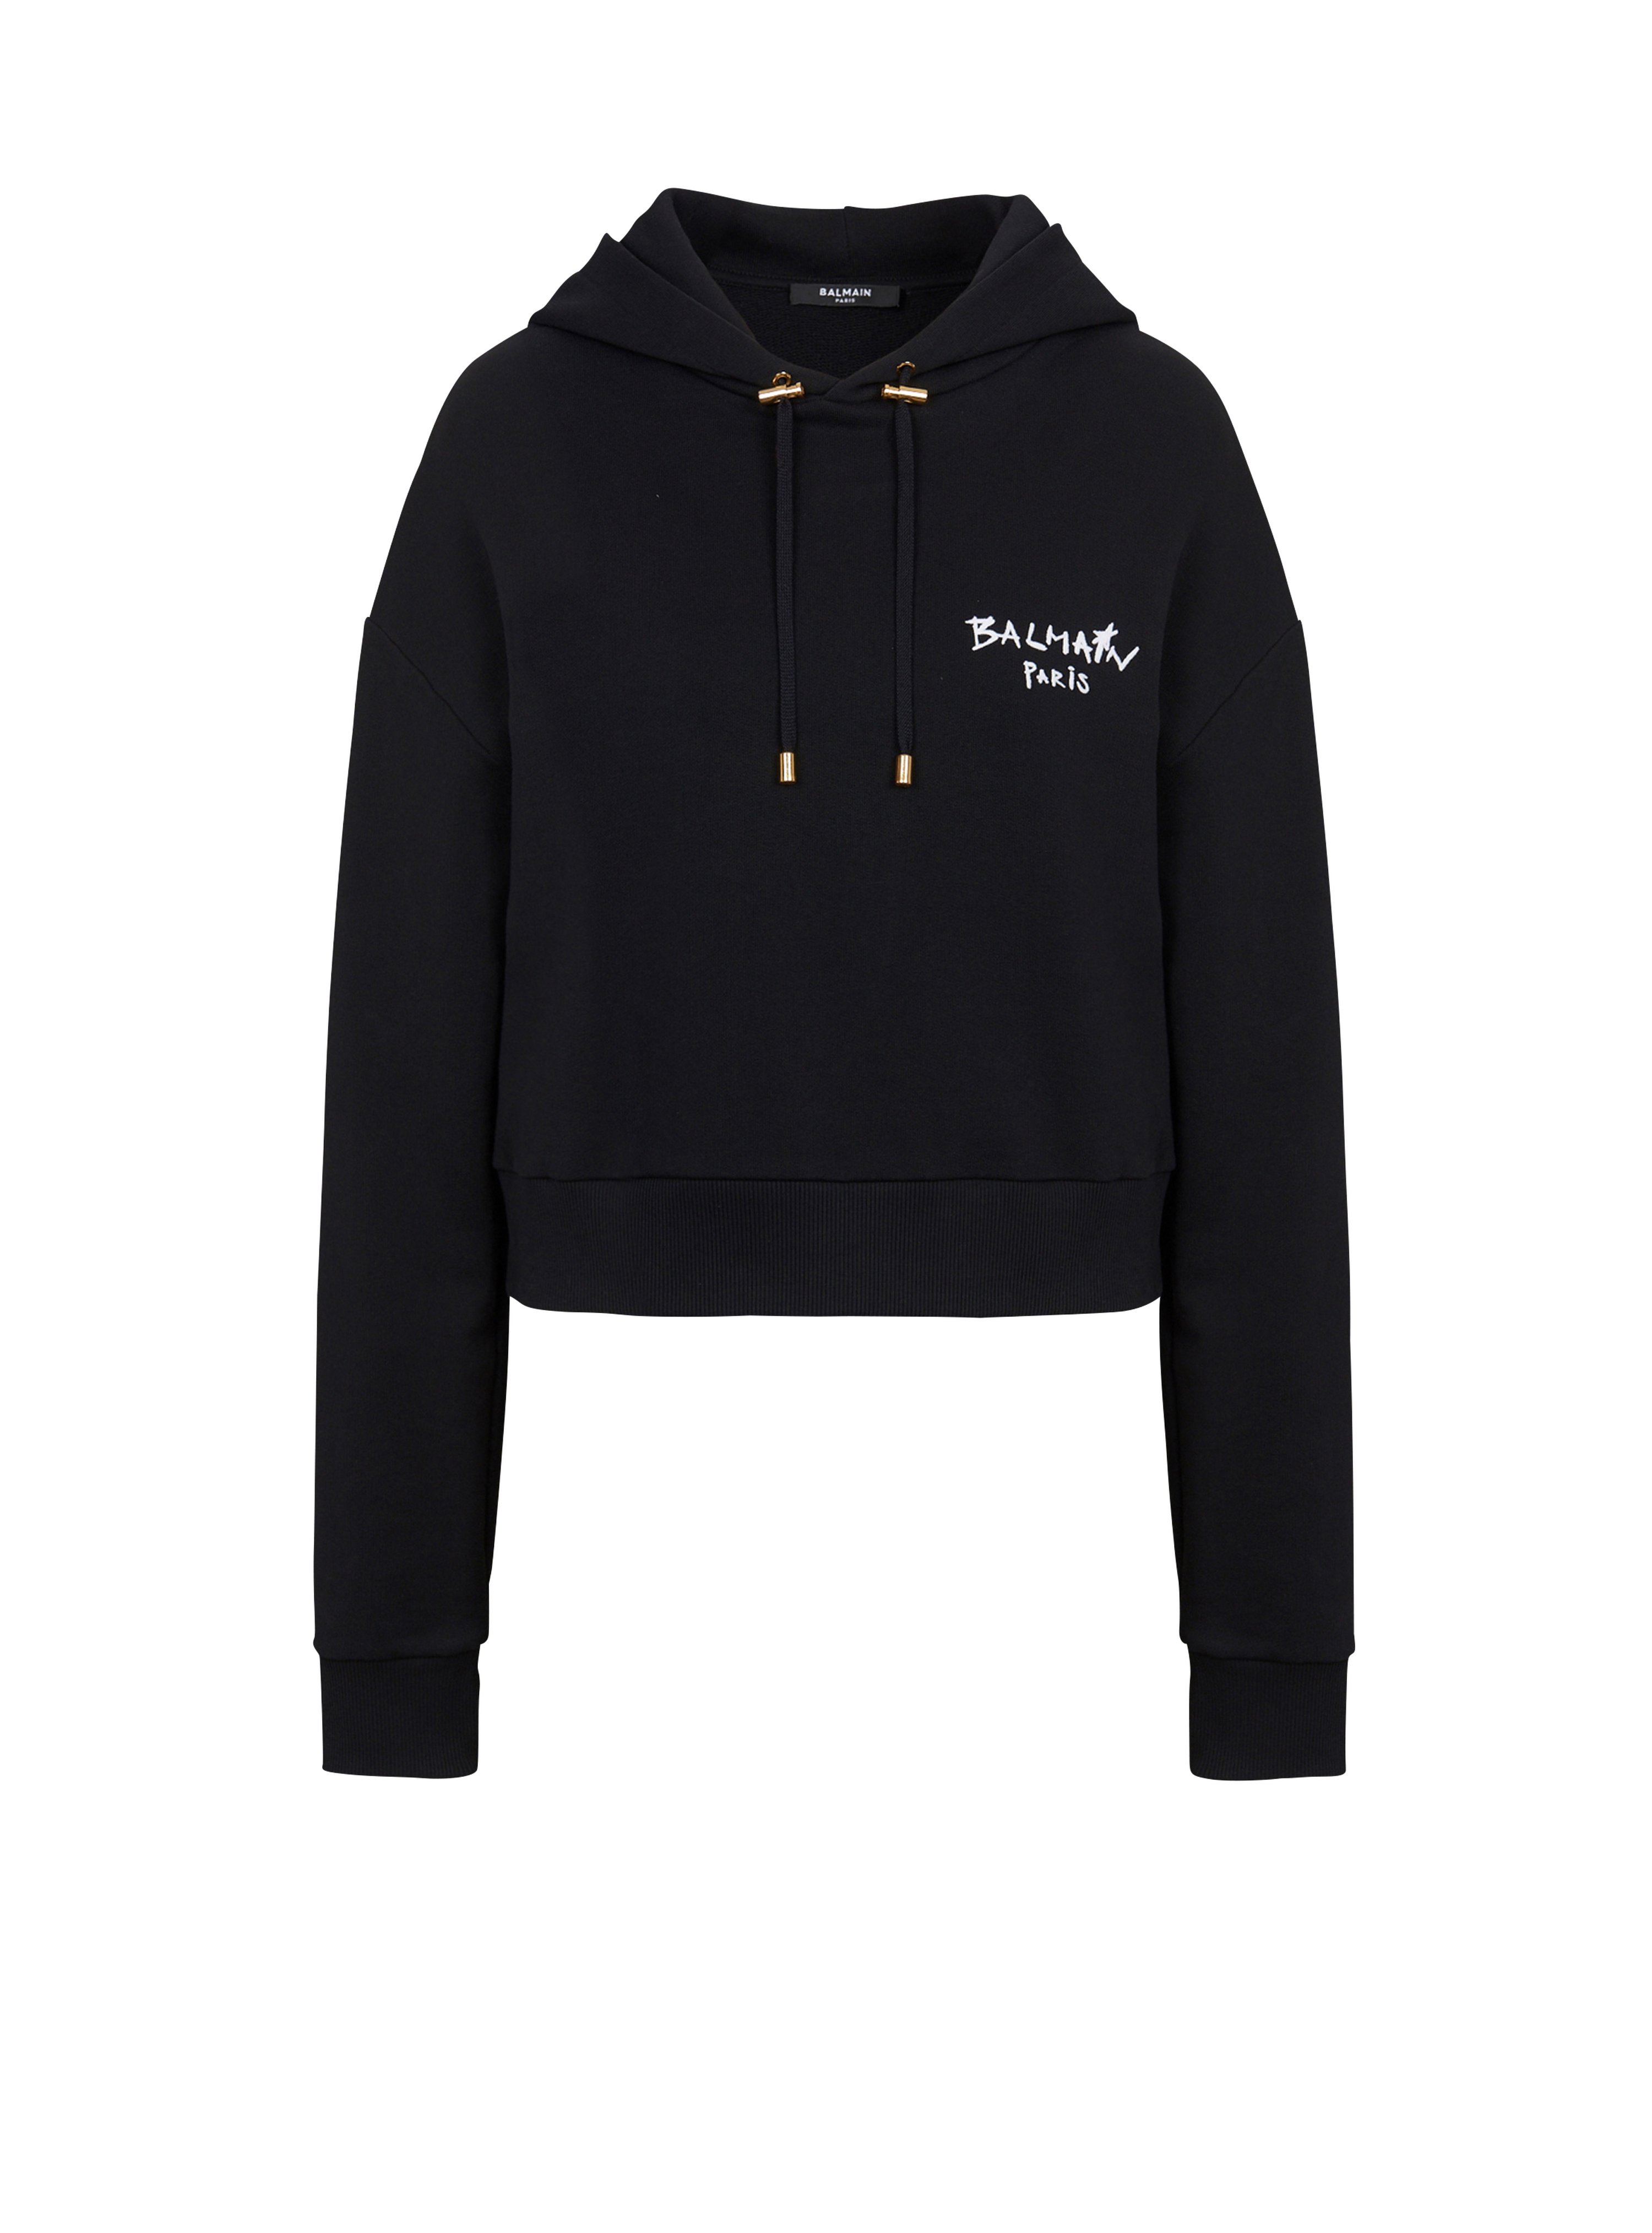 Cropped eco-design cotton sweatshirt with flocked graffiti Balmain logo, black